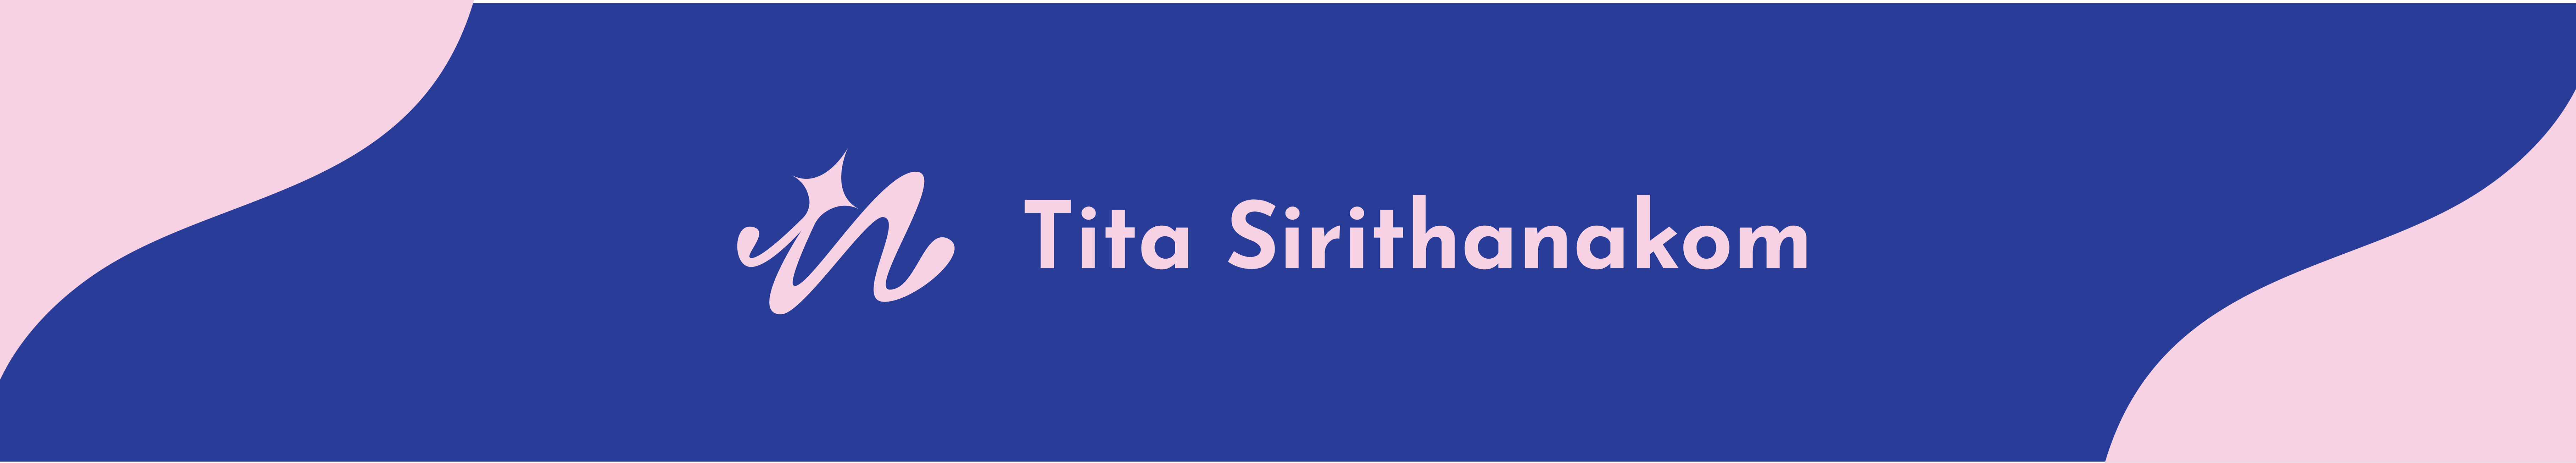 Banner profilu uživatele Tita Sirithankom